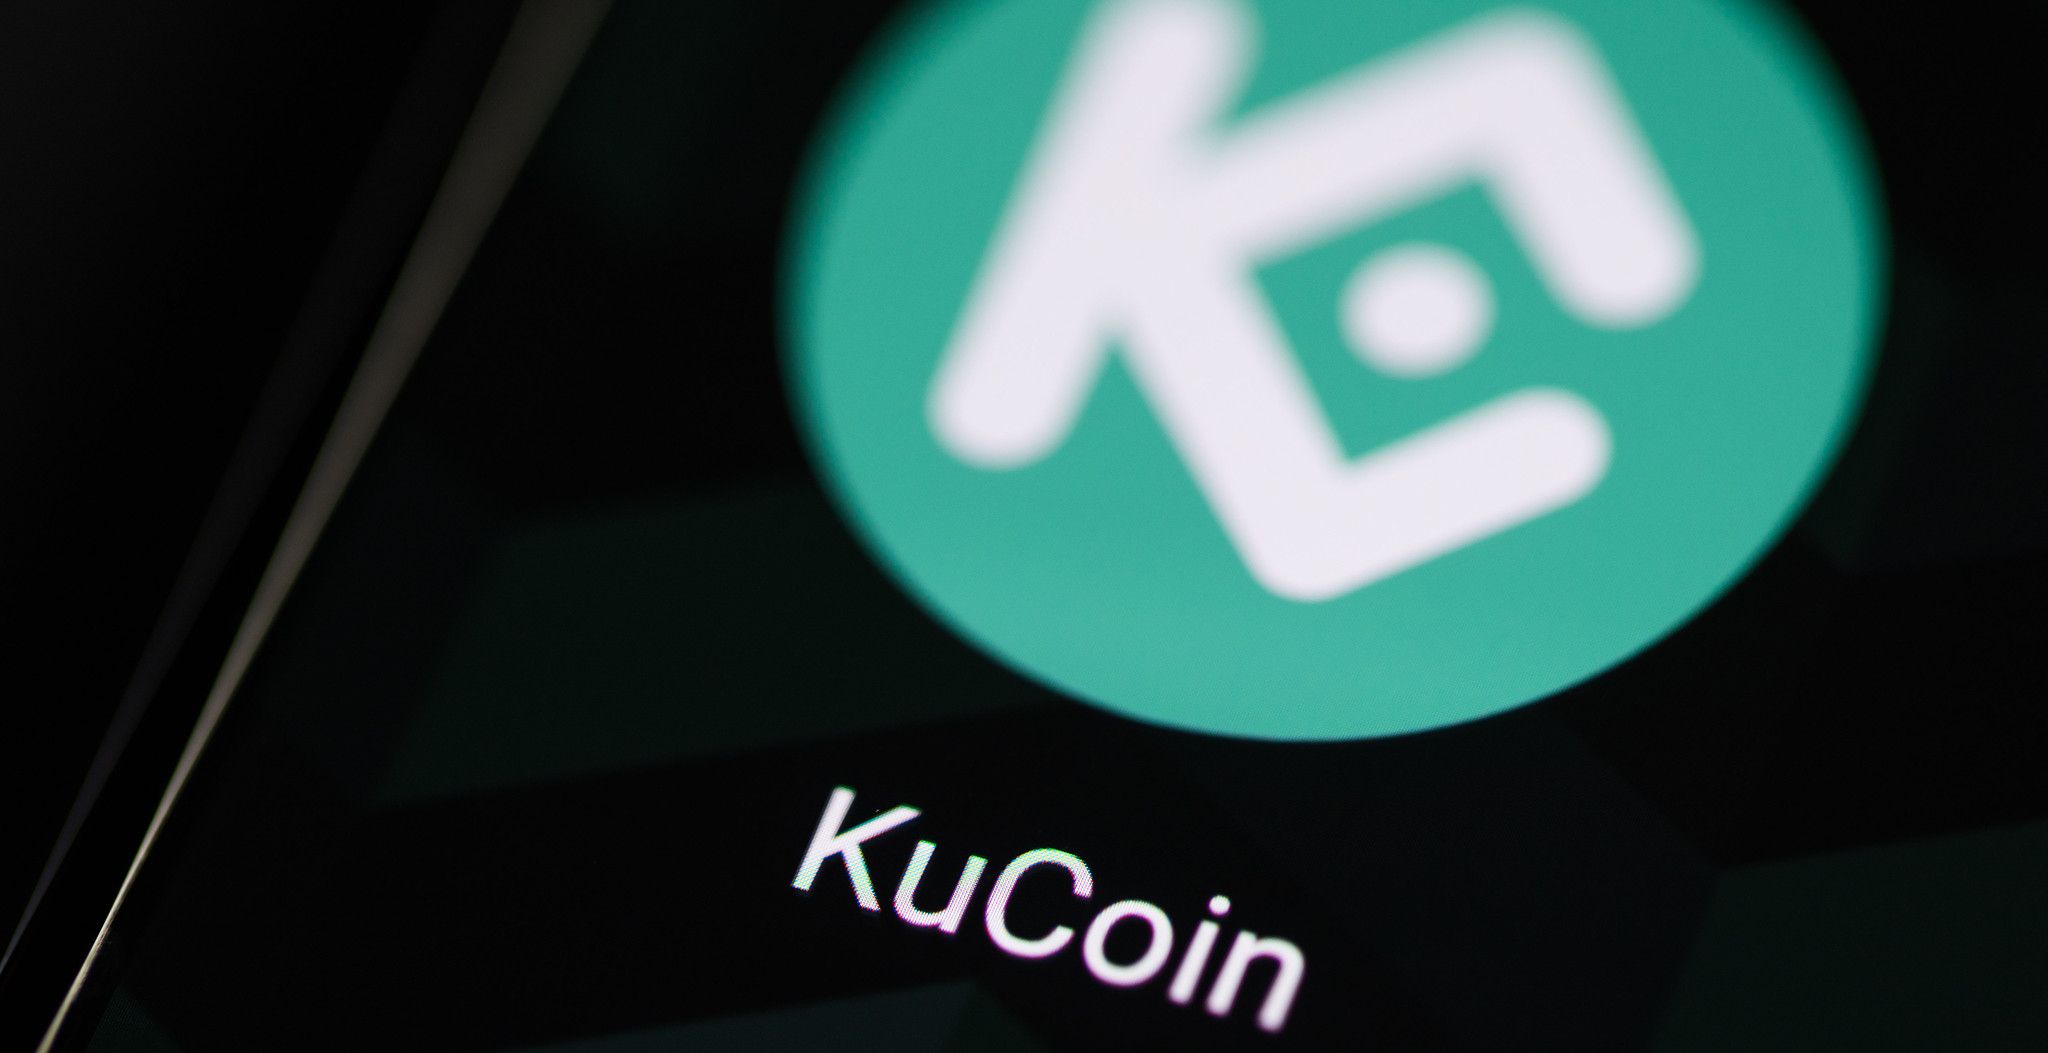 kucoin logo on smartphone screen